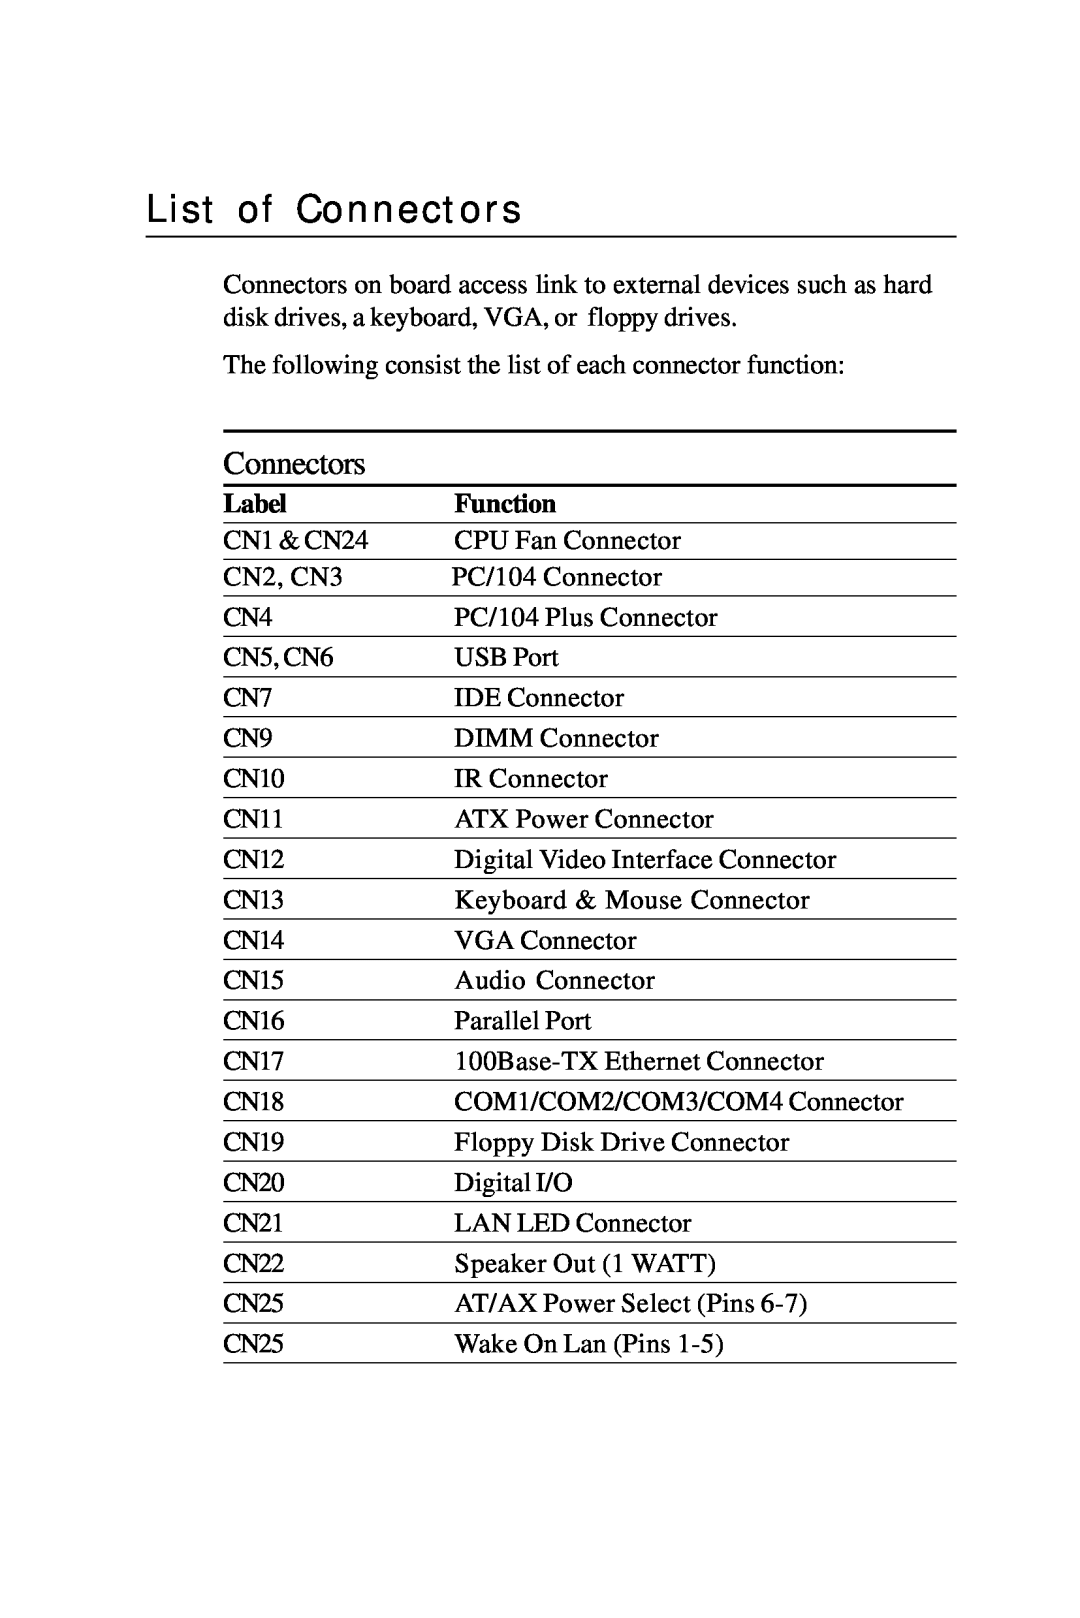 Intel PCM-6896 manual List of Connectors 